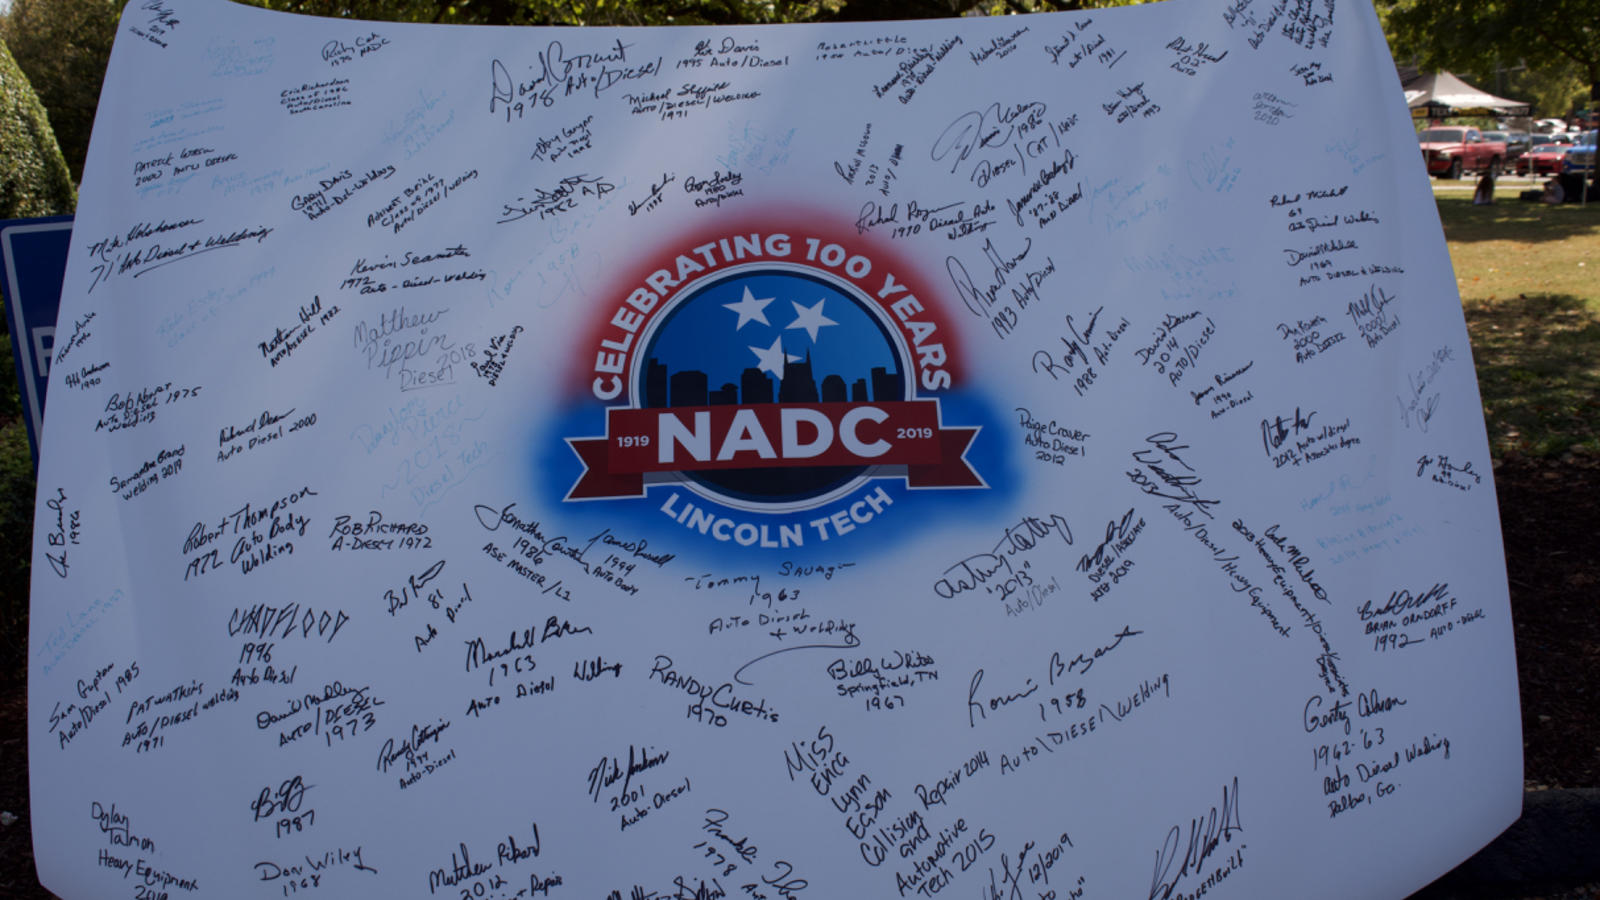 The Commemorative Hood as Autographed by Nashville Alumni.